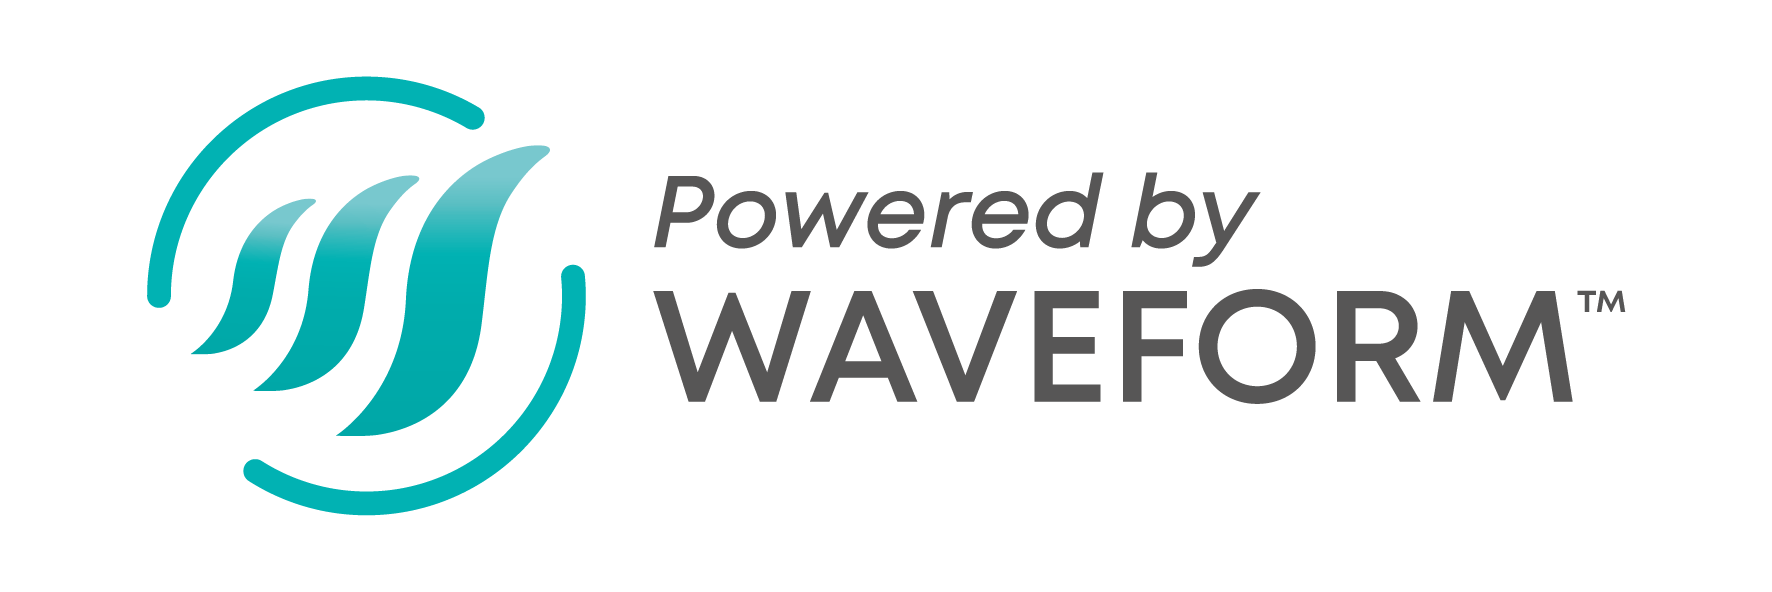 Waveform logo